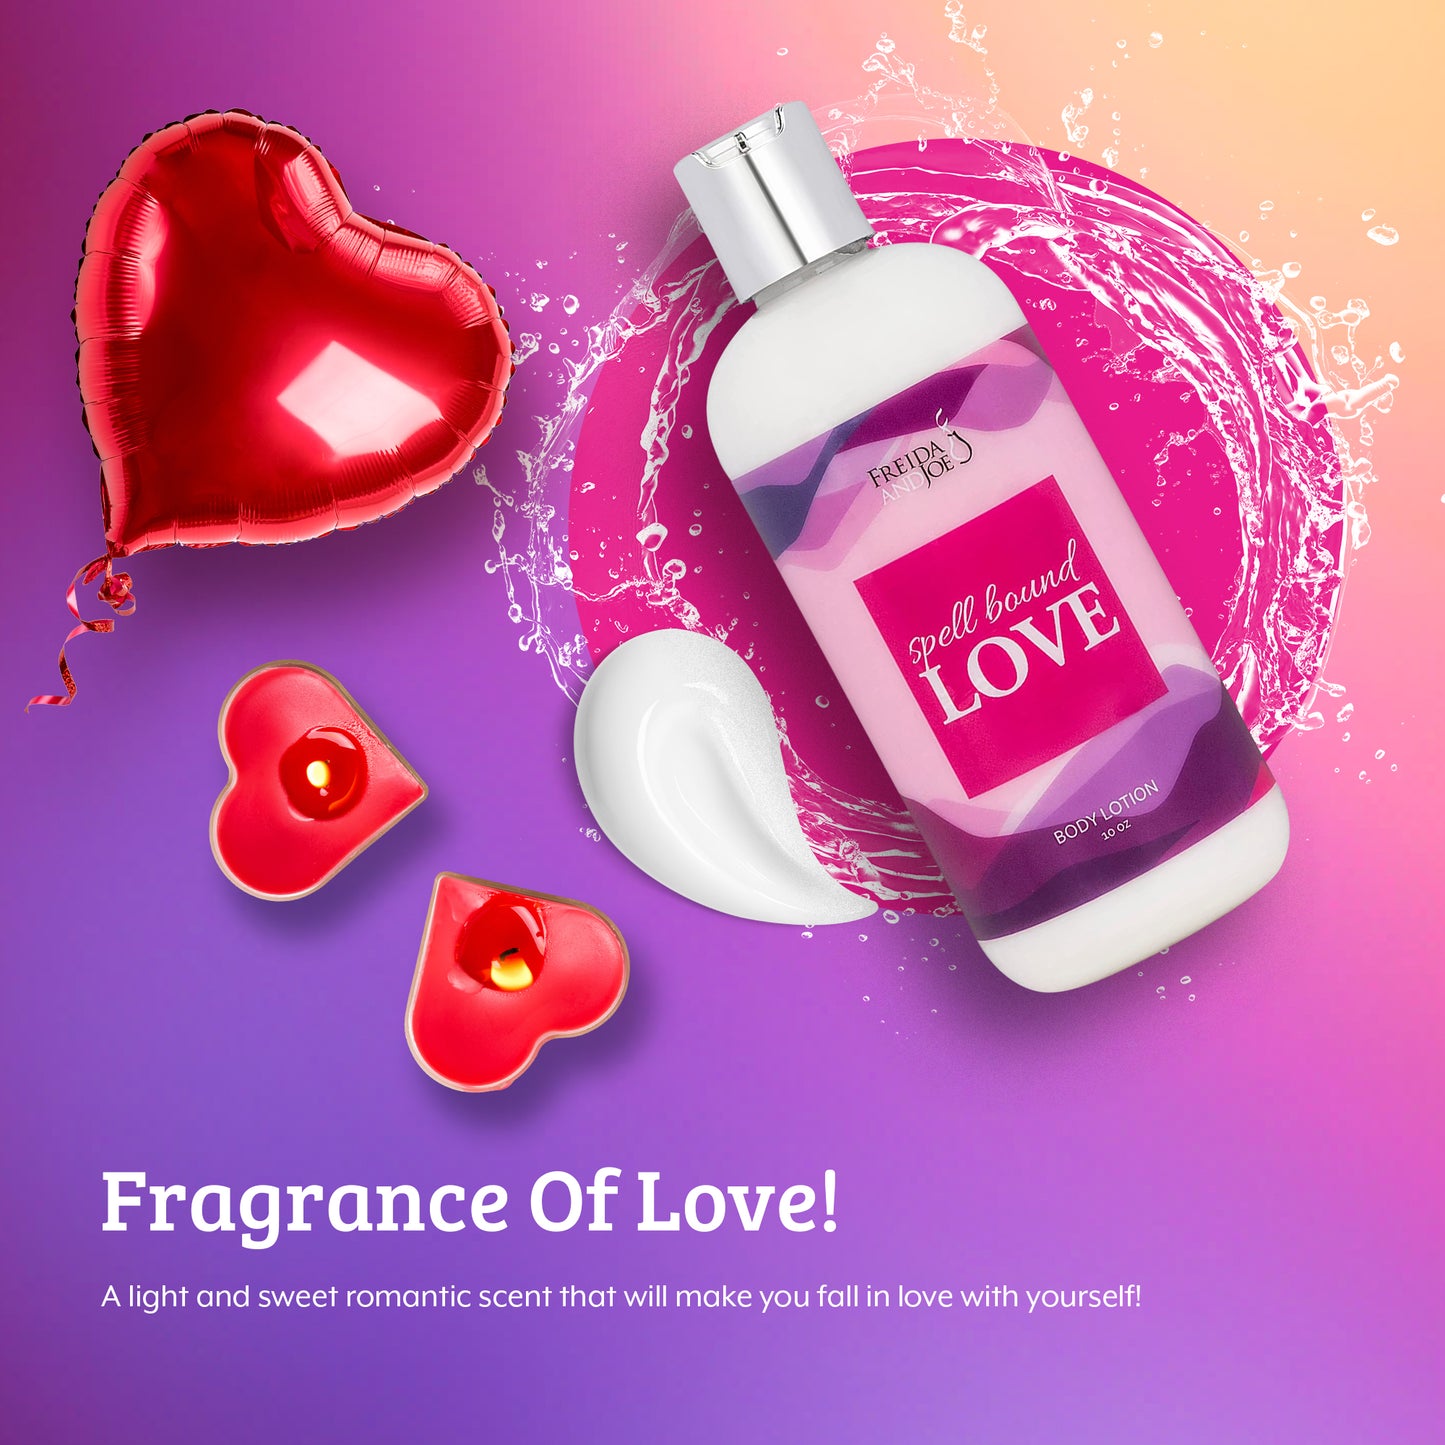 Spell Bound Love Fragrance Body Lotion in 10oz Bottle